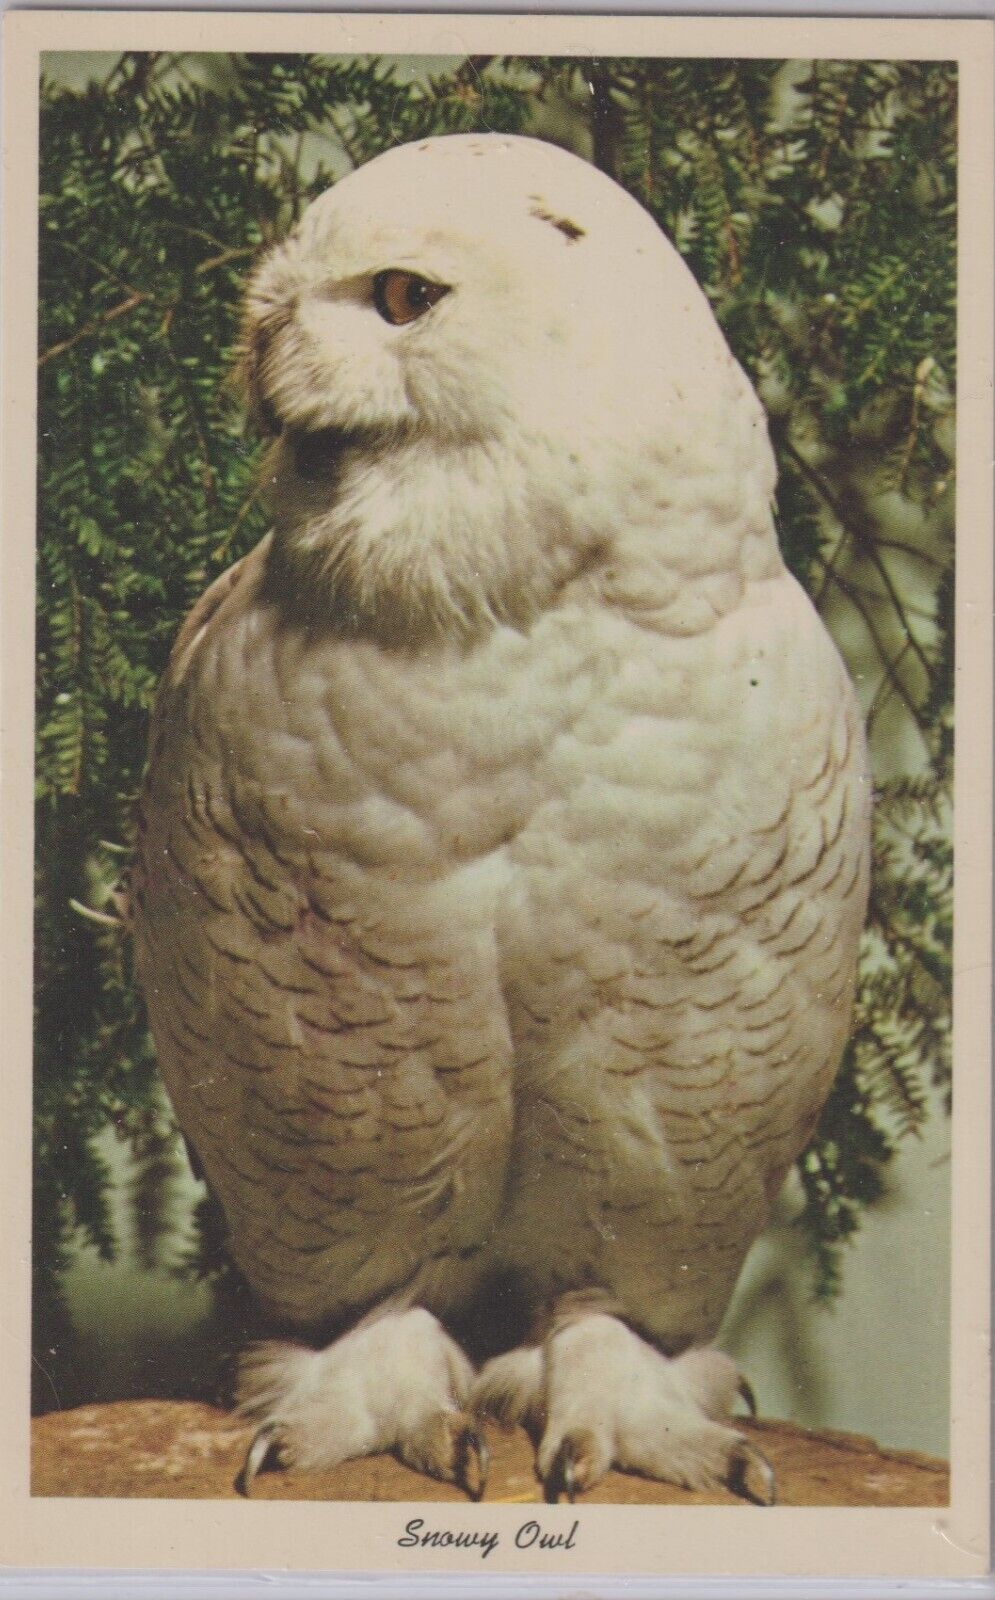 SNOWY OWL - NATIONAL ZOOLOGICAL PARK WASHINGTON D.C. EARLY POST CARD